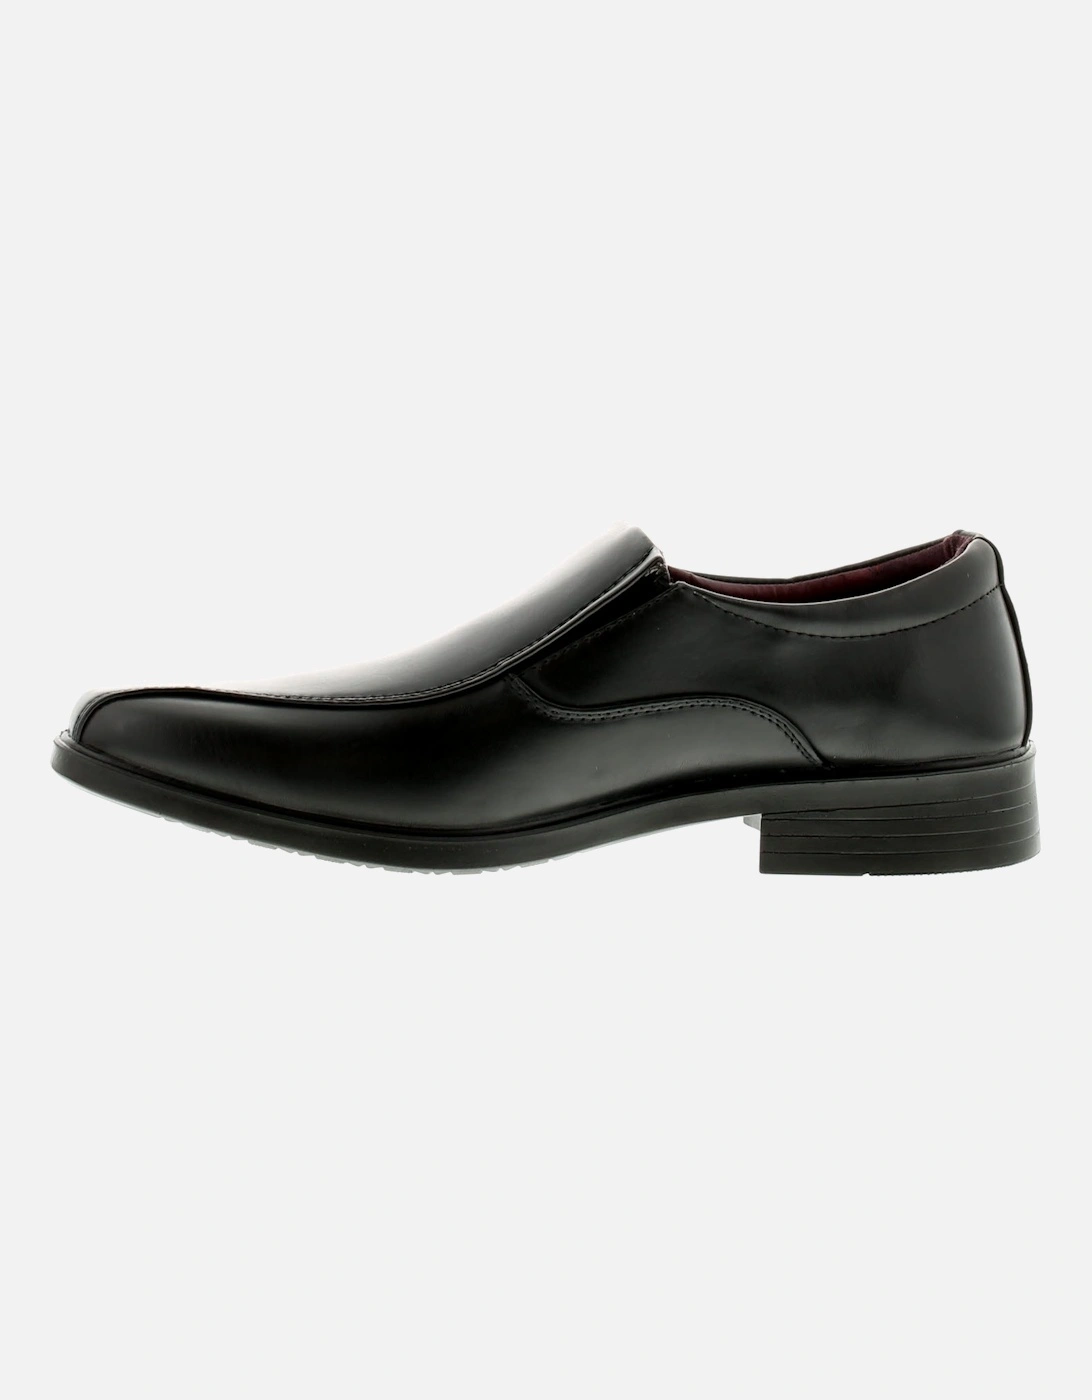 Mens Shoes Work School Formal Brenner Slip On black UK Size